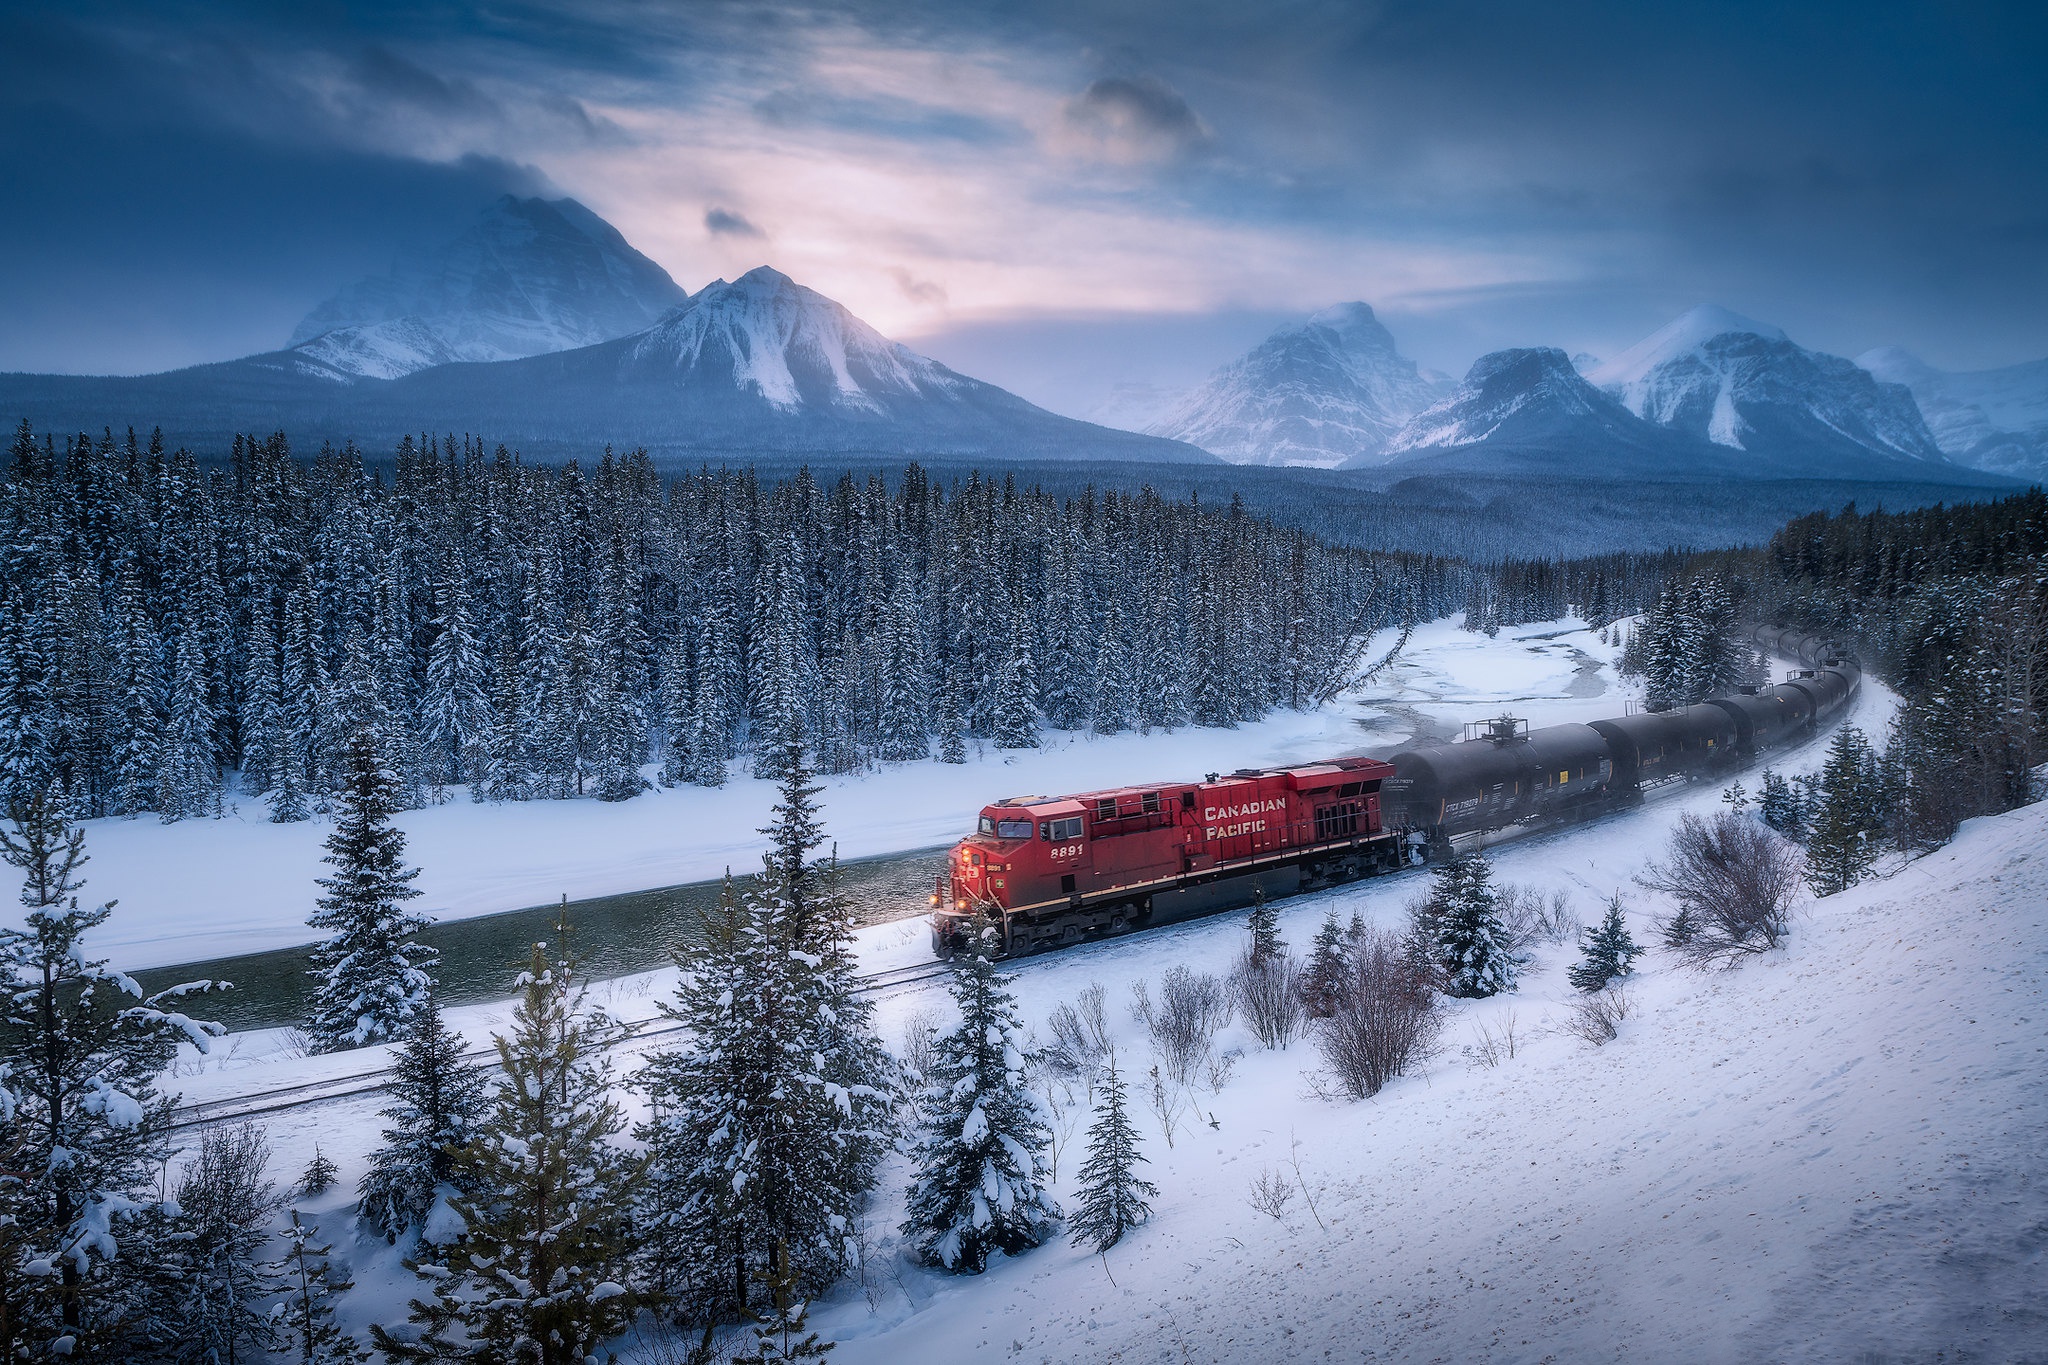 Descarga gratuita de fondo de pantalla para móvil de Invierno, Nieve, Montaña, Canadá, Bosque, Tren, Parque Nacional Banff, Vehículos.